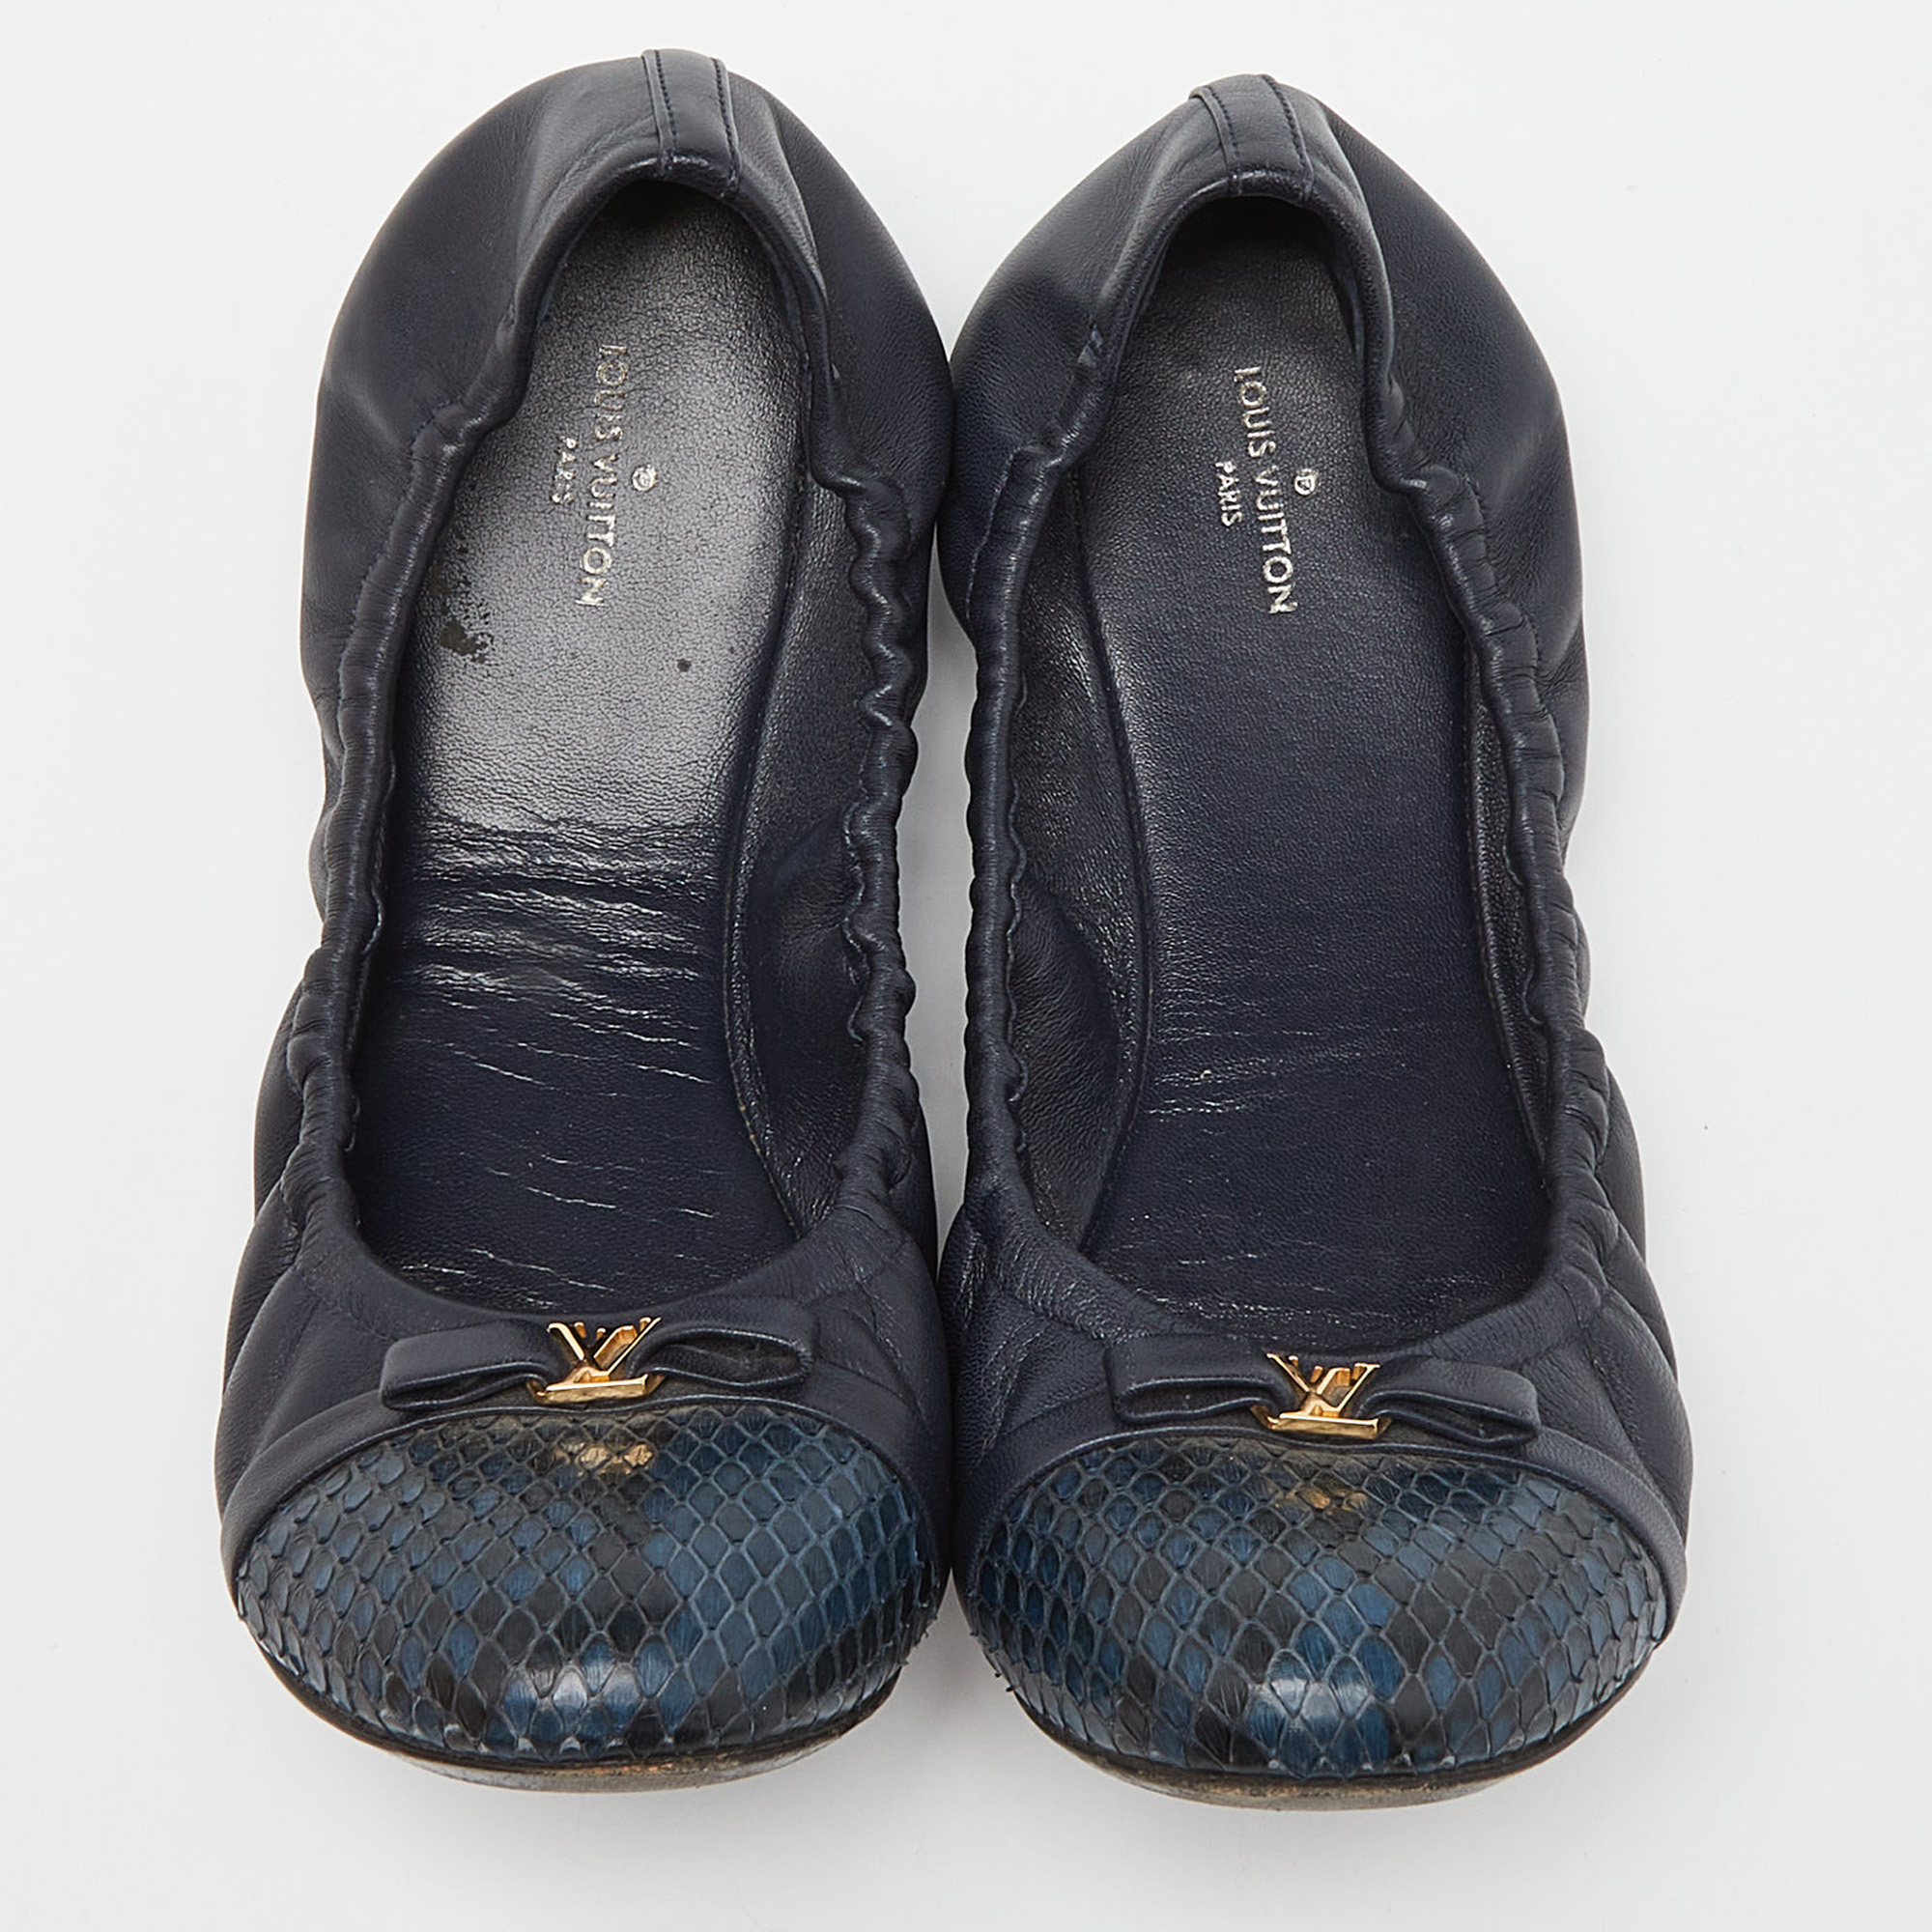 Louis Vuitton Blue Leather And Python Elba Scrunch Ballet Flats Size 39